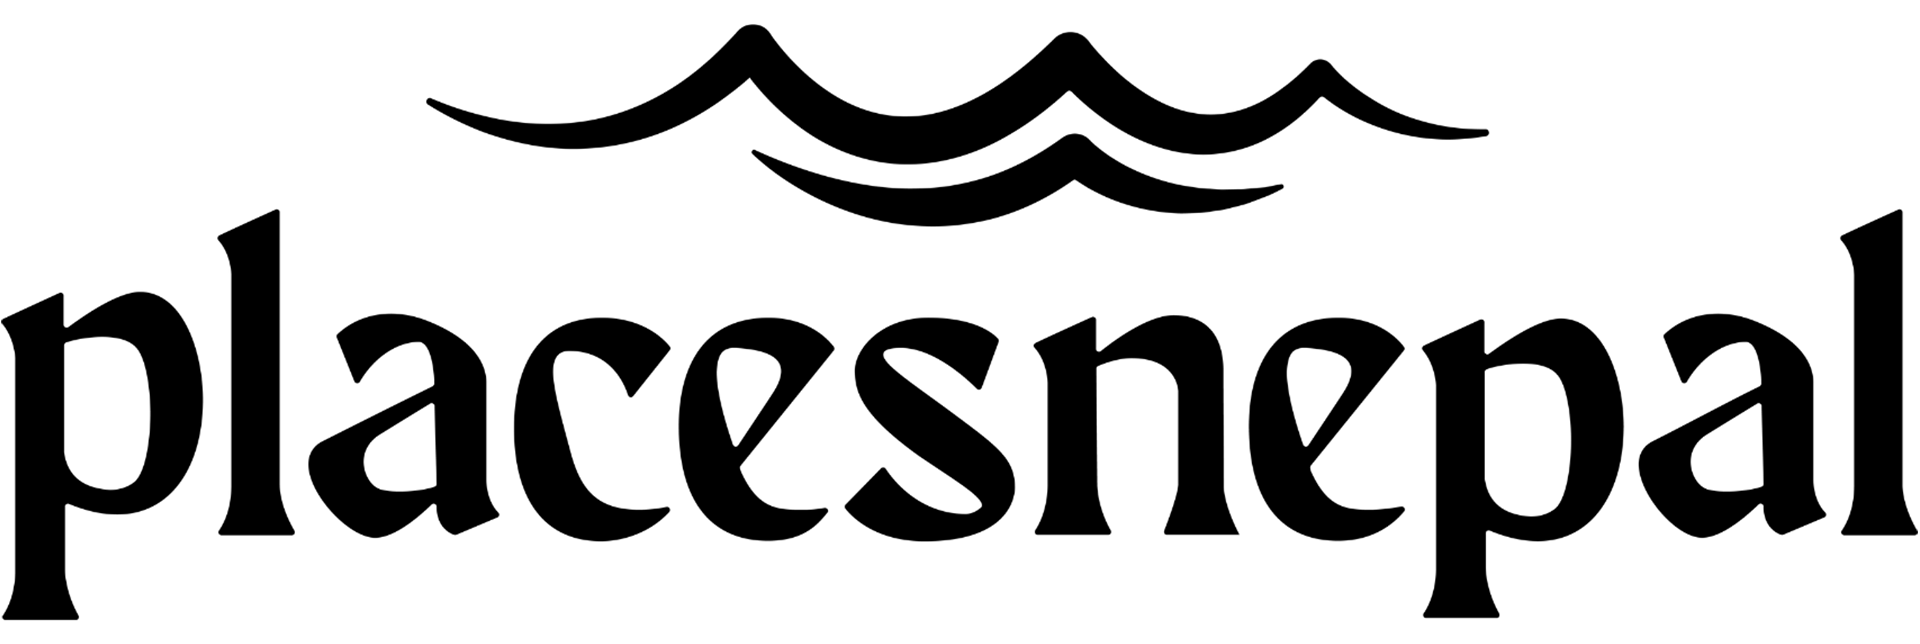 placenpeal-dark-logo